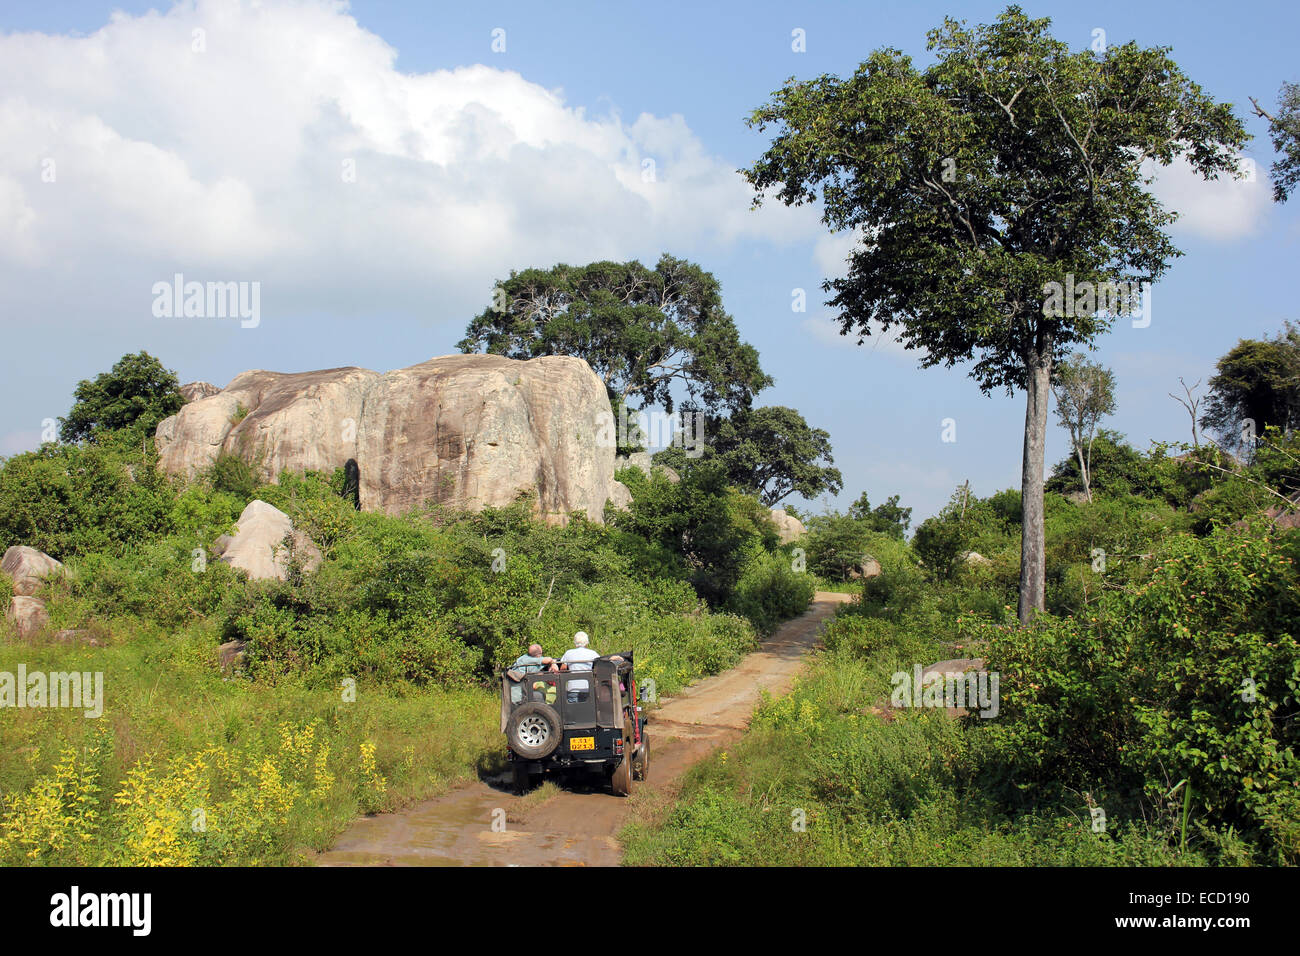 Tourists Enjoying A Jeep Safari into Hurulu Eco-Park, an International Biosphere Reserve, Sri Lanka Stock Photo